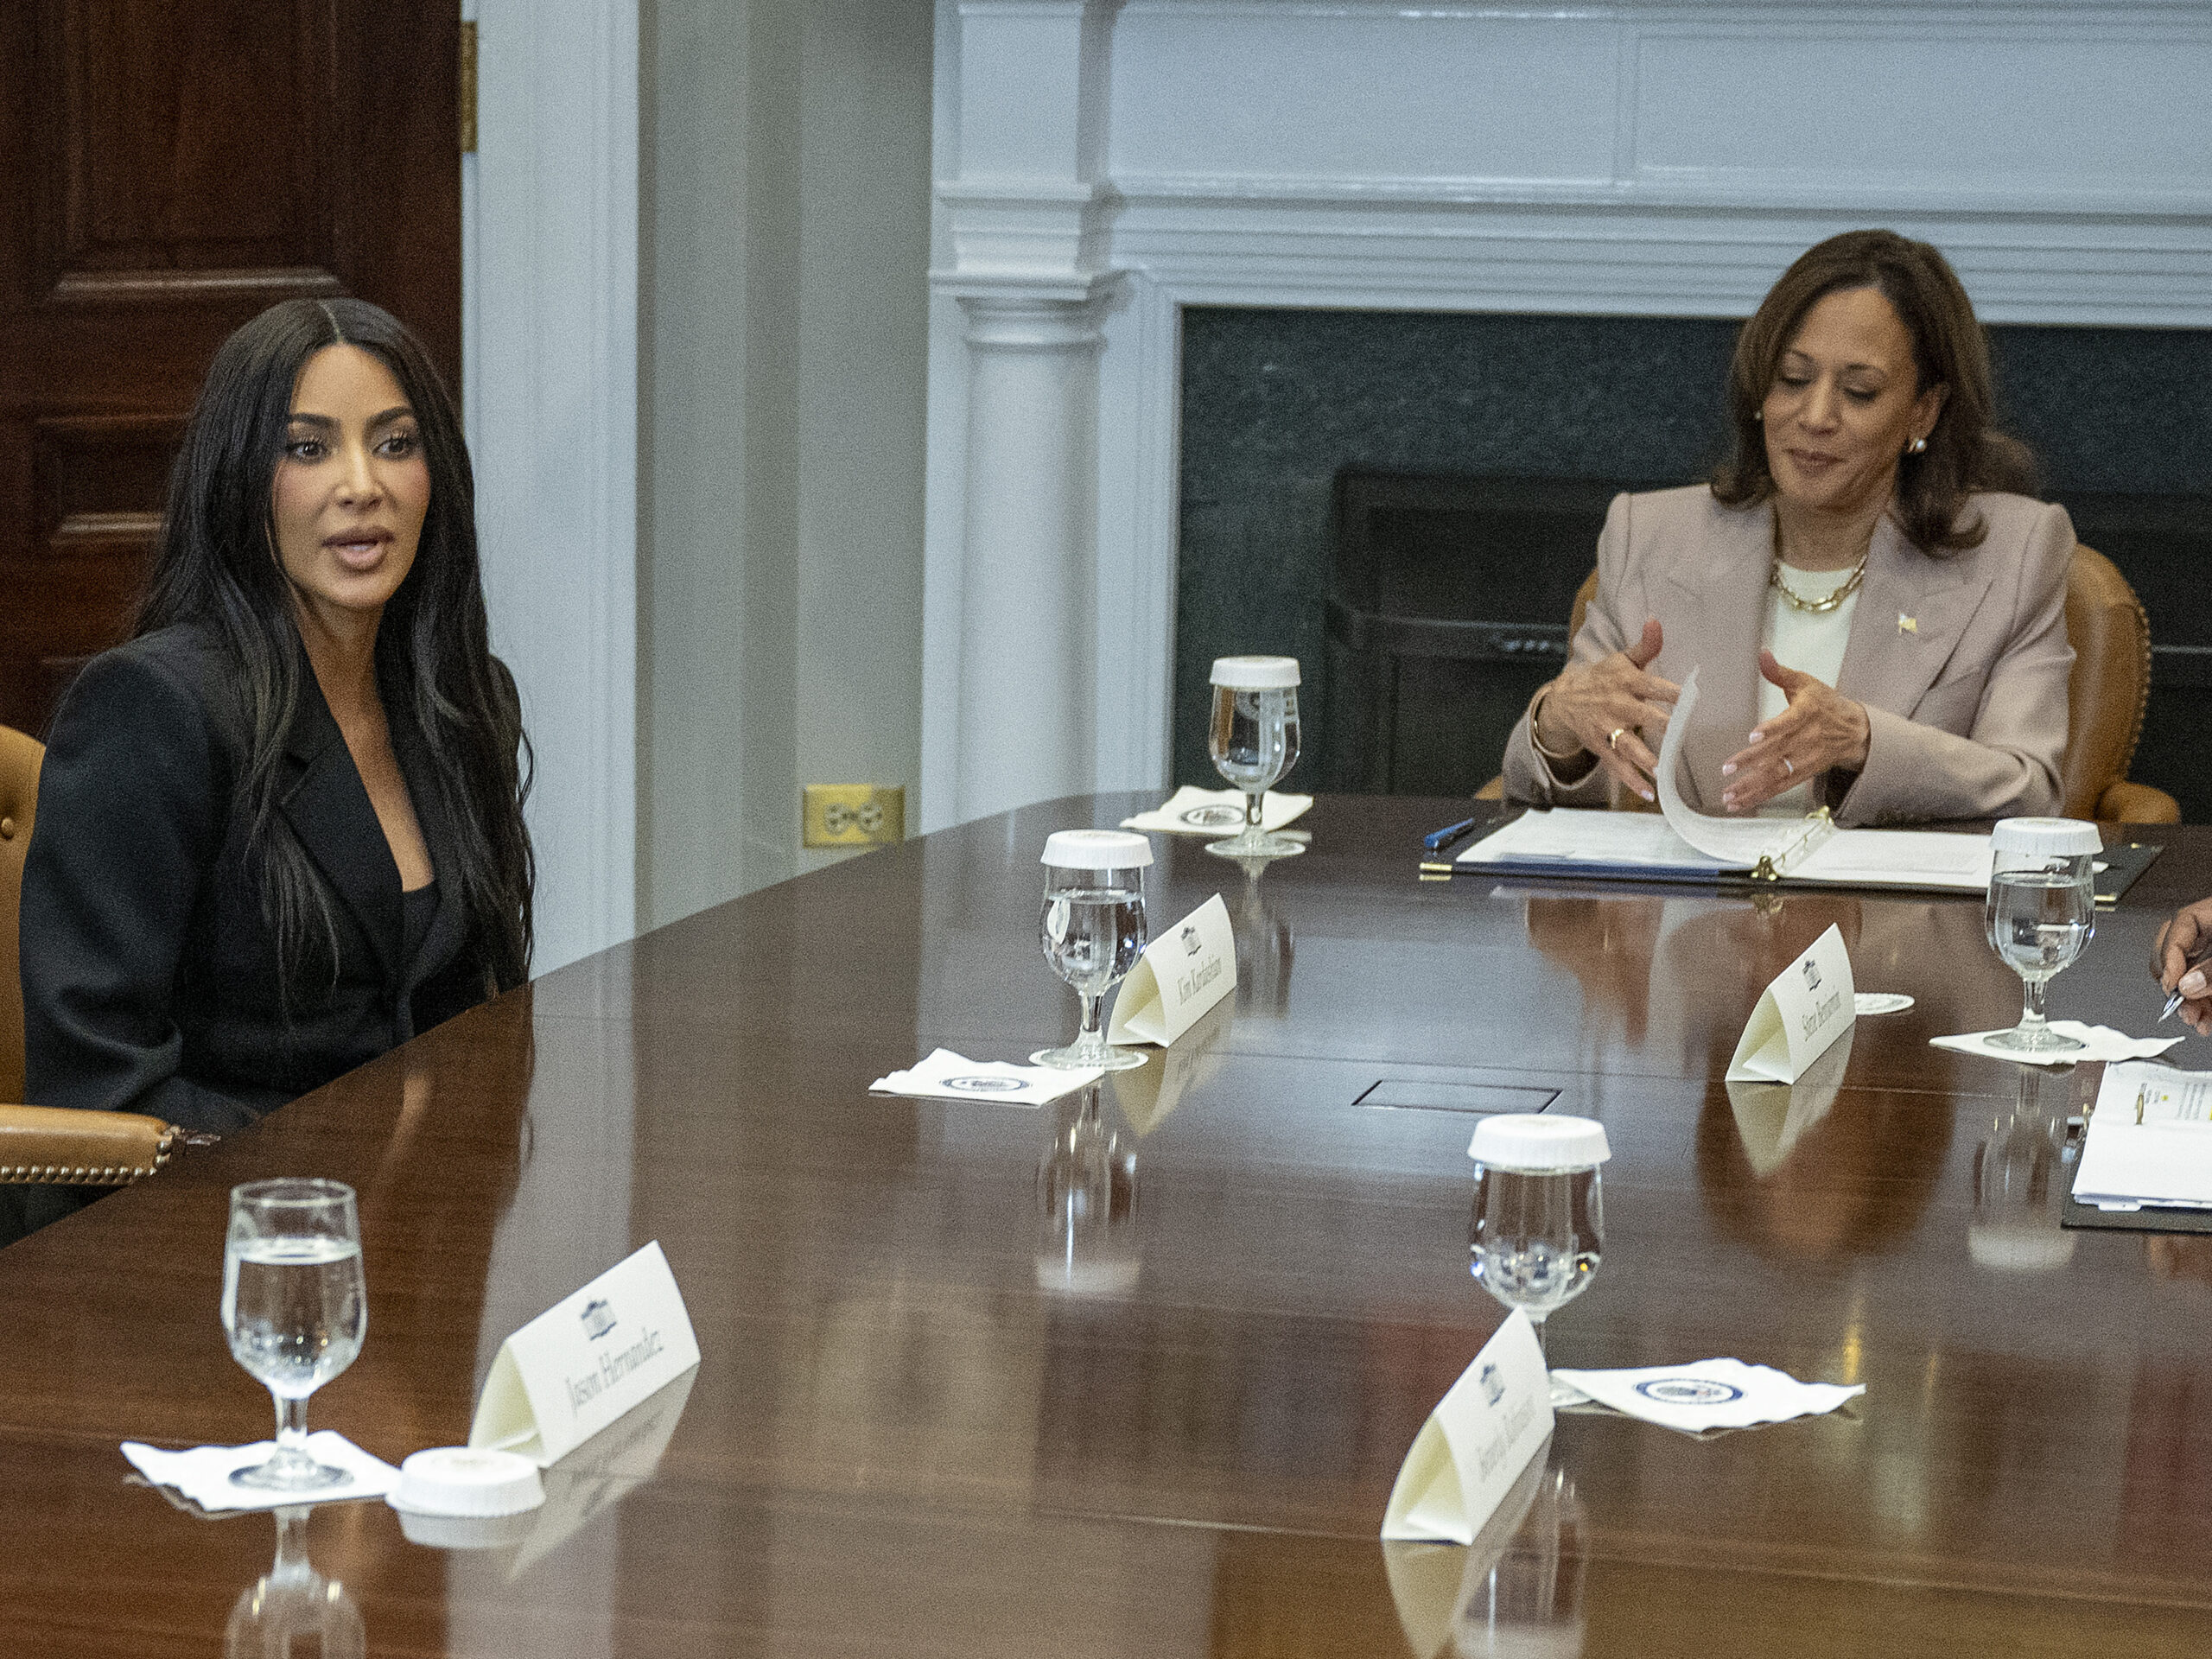 Kim Kardashian visits the White House to highlight criminal justice reform